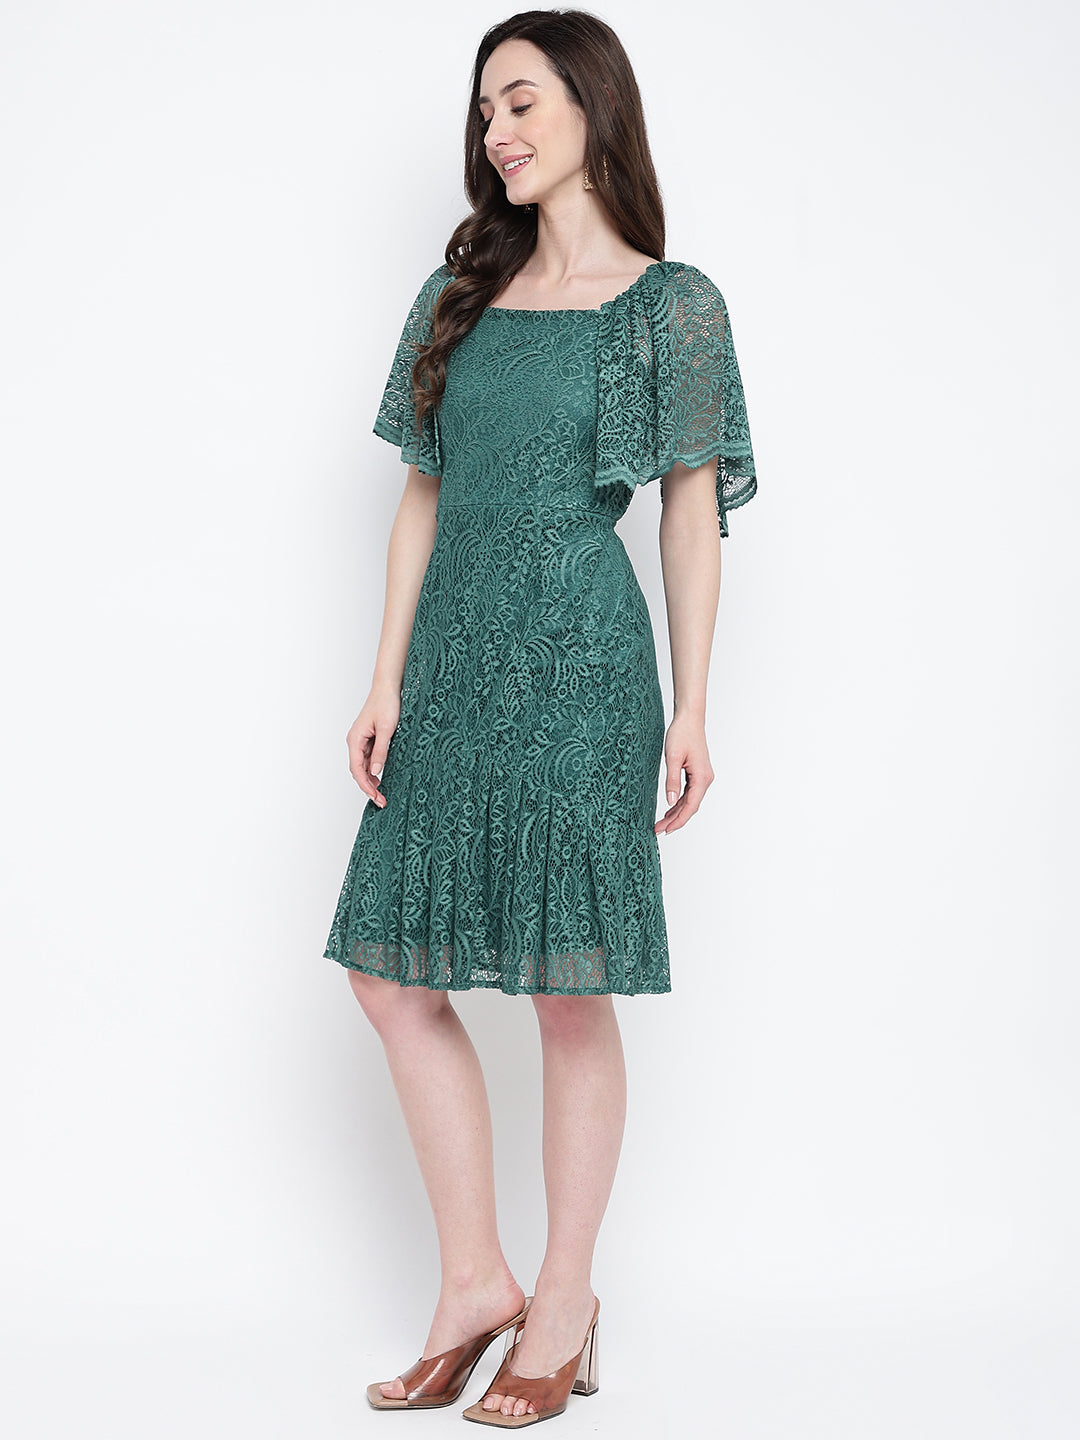 Green Half Sleeve Solid Strapless Dress